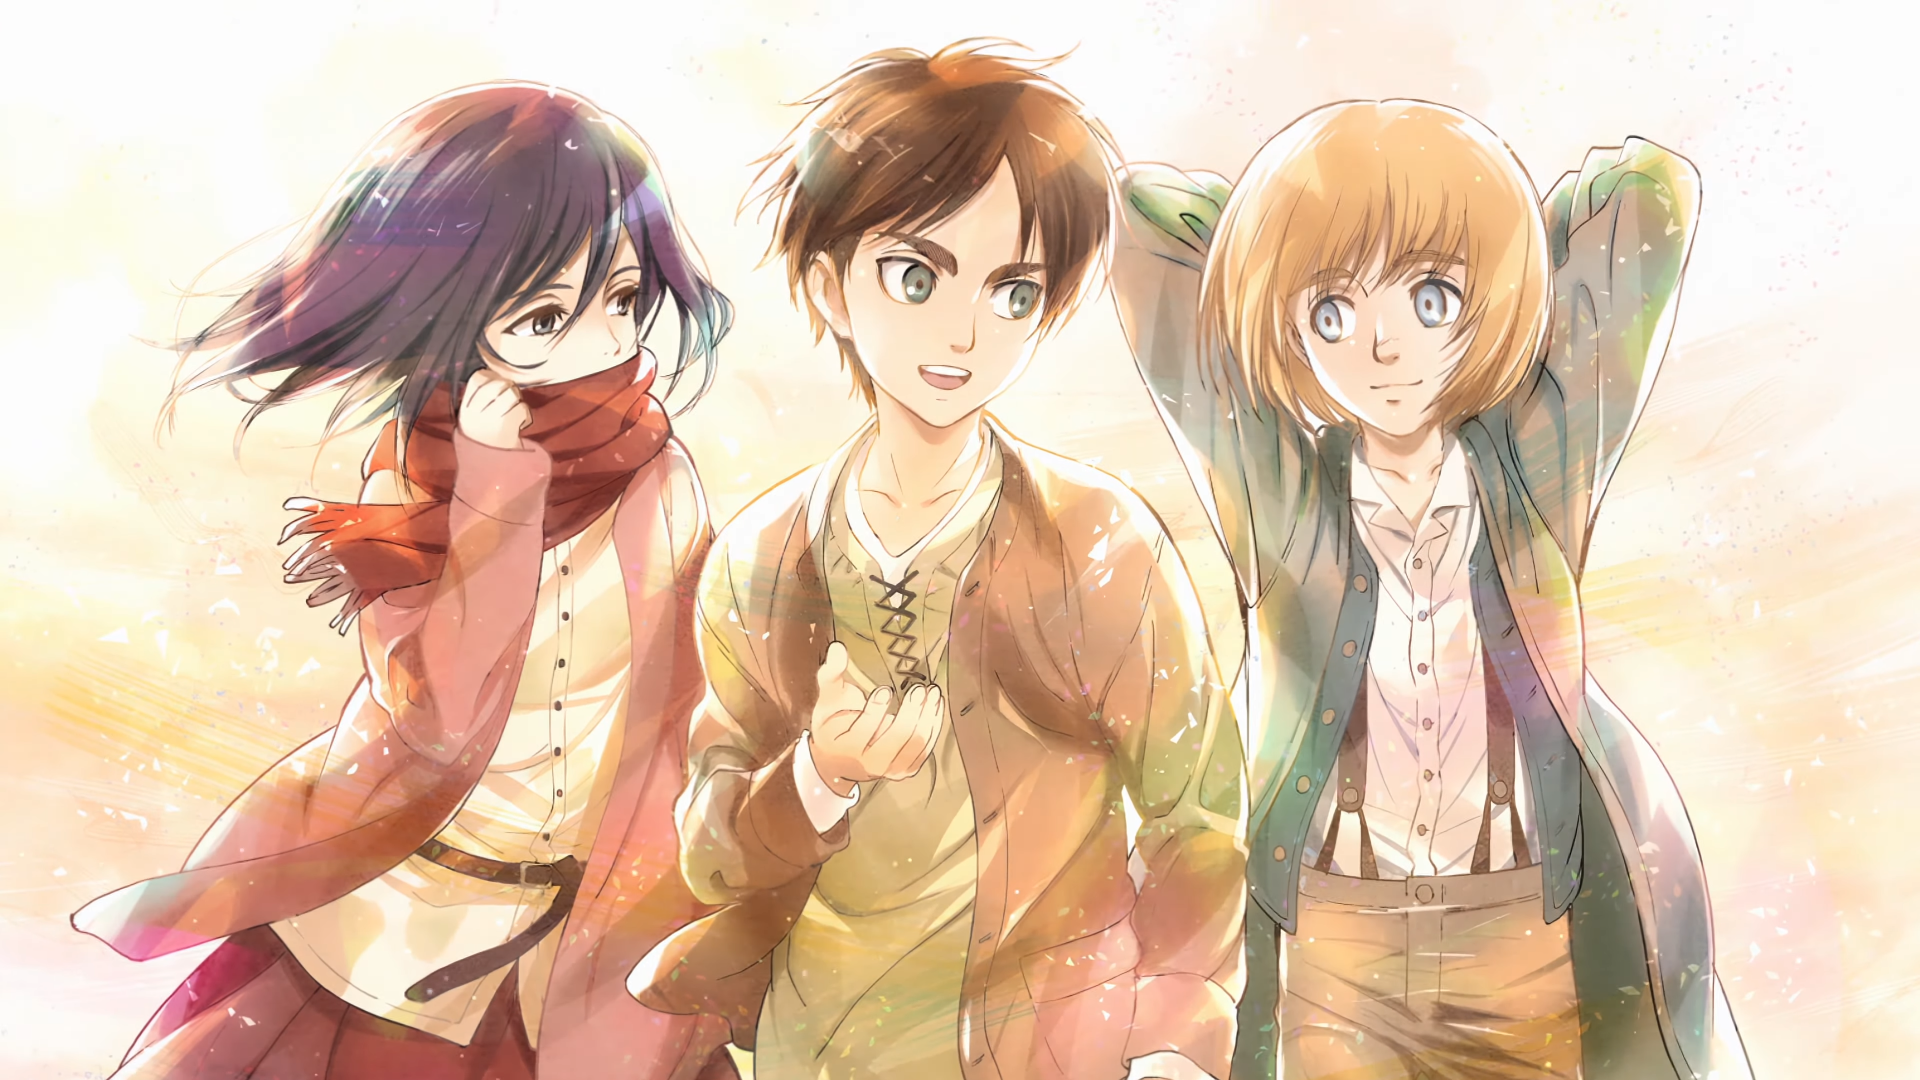 Young Mikasa, Eren, & Armin Art Wallpaper (Season 3 Intro Screenshot) by Sanoboss